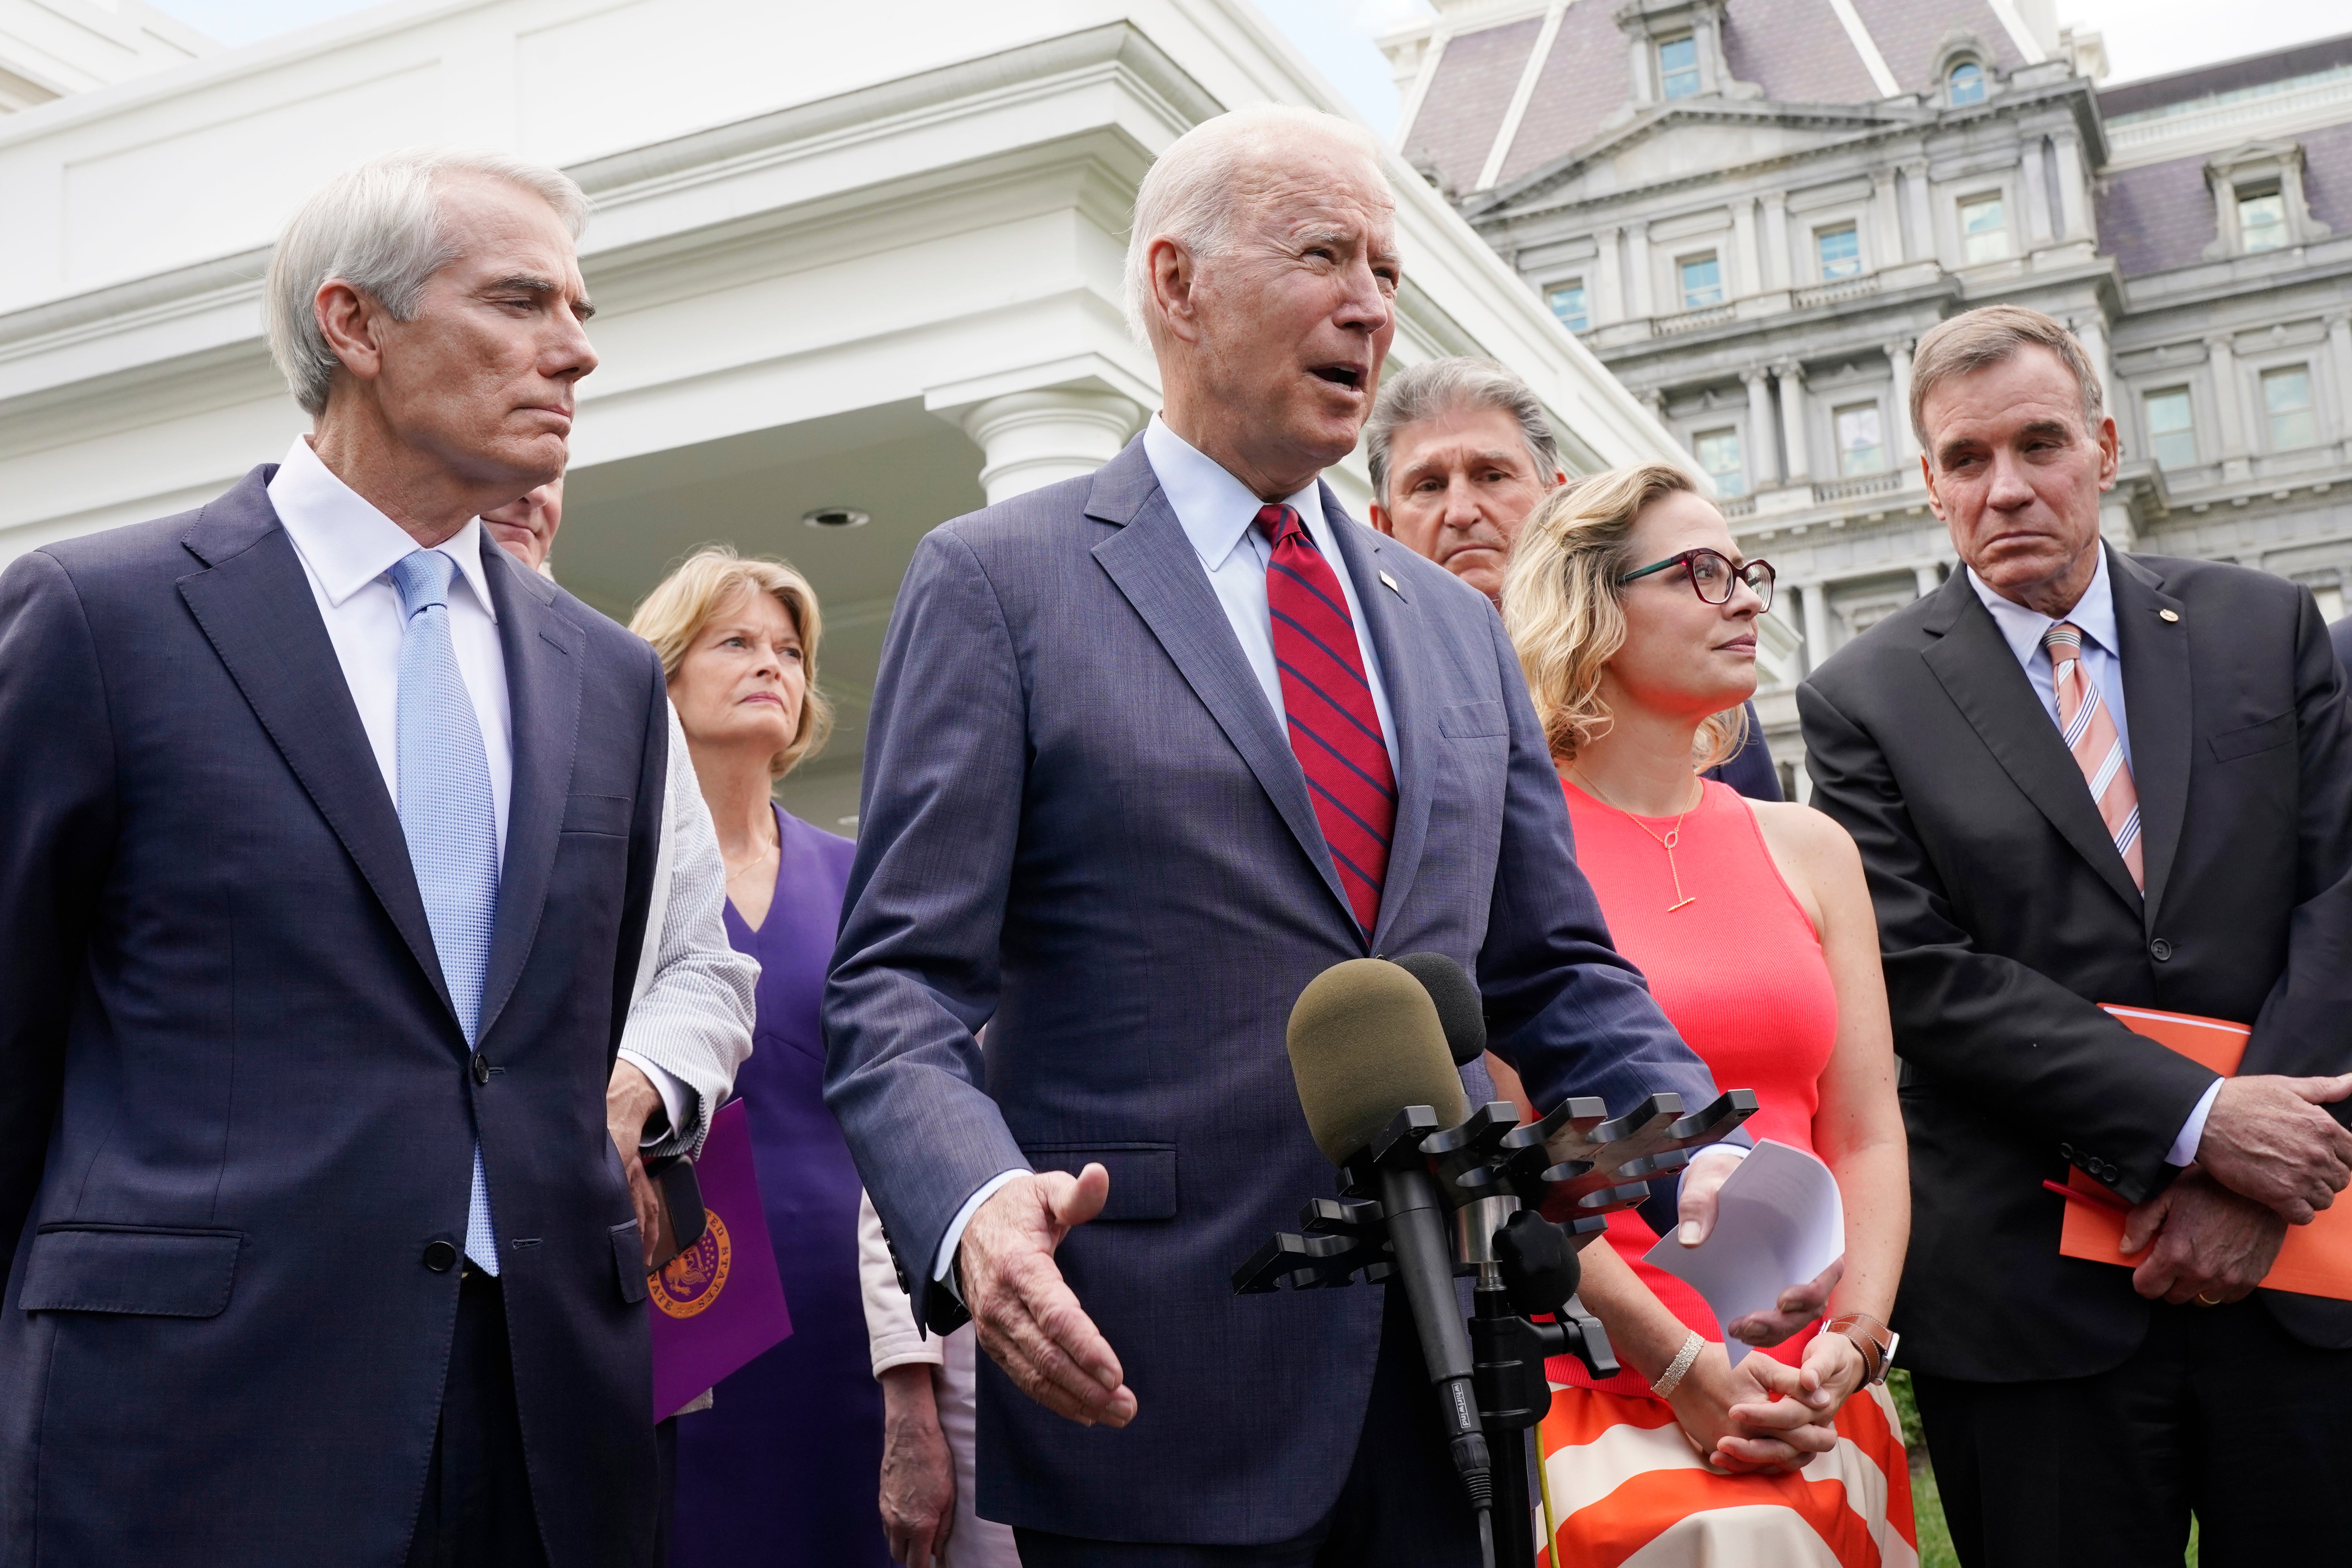 Biden with a bipartisan group of Senators including Rob Portman and Tammy Baldwin